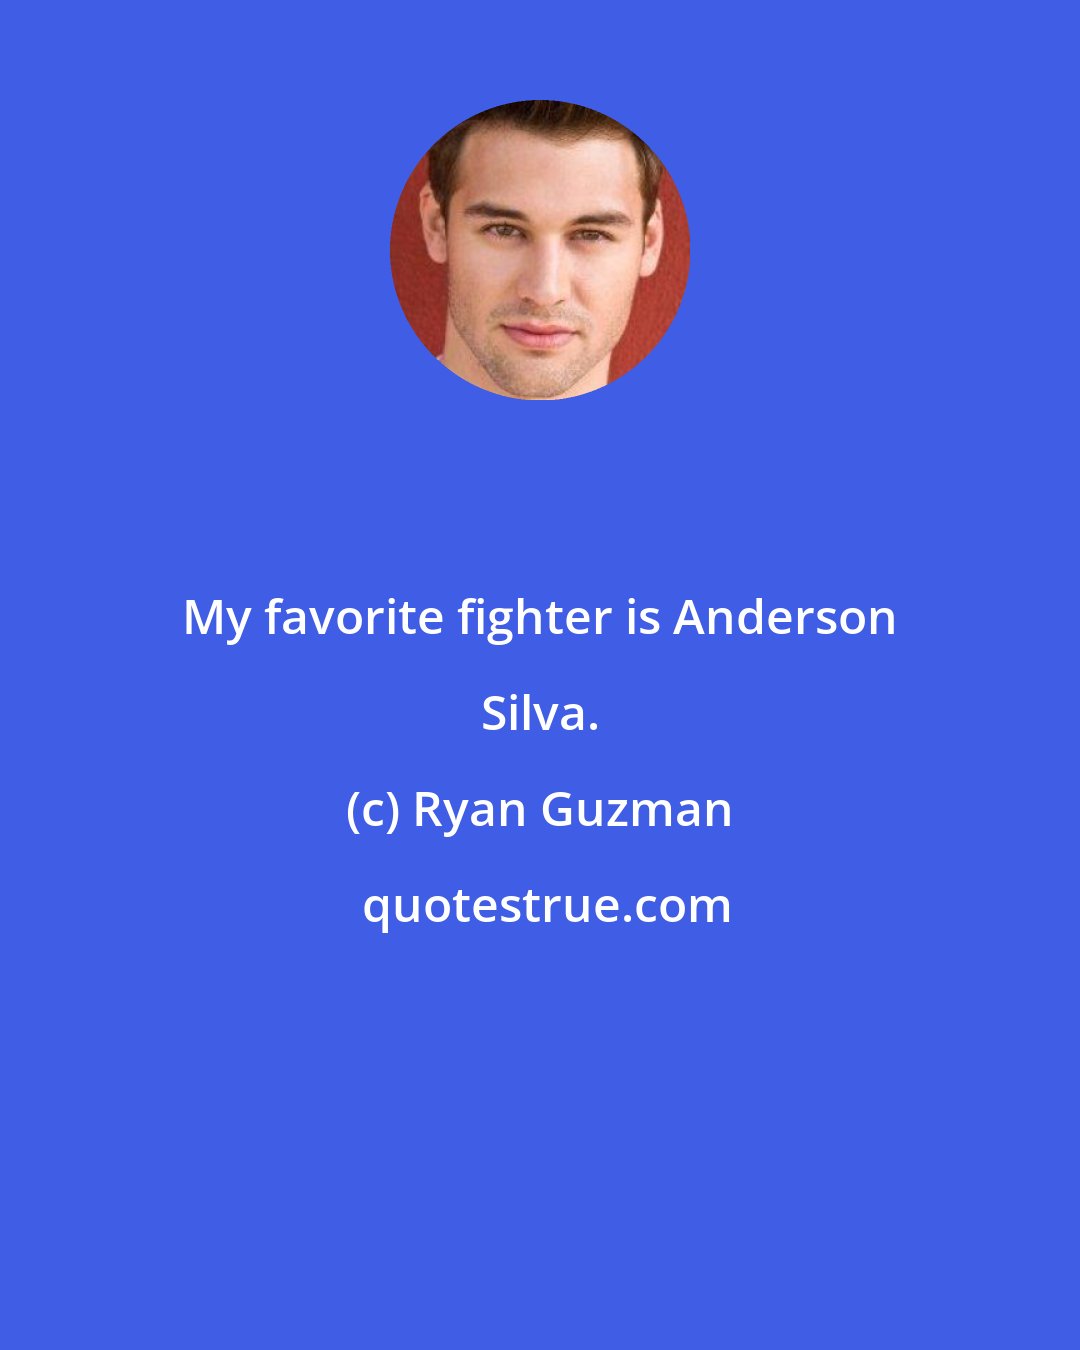 Ryan Guzman: My favorite fighter is Anderson Silva.